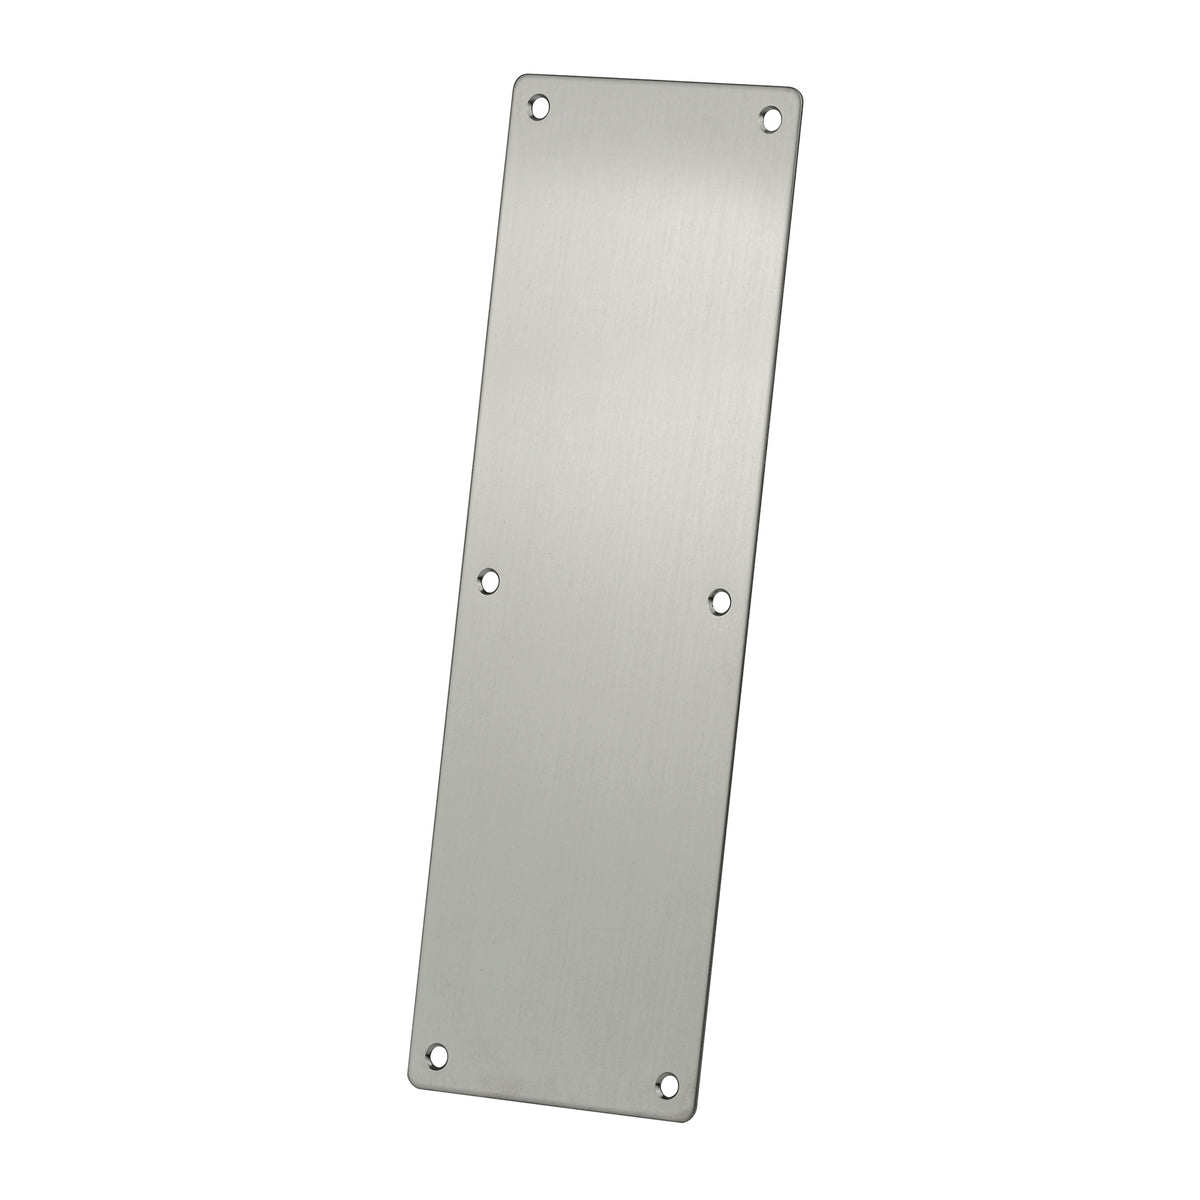 PP1.x - Door Plain Plate 100 x 300 x 1.8mm - Stainless Steel or Black